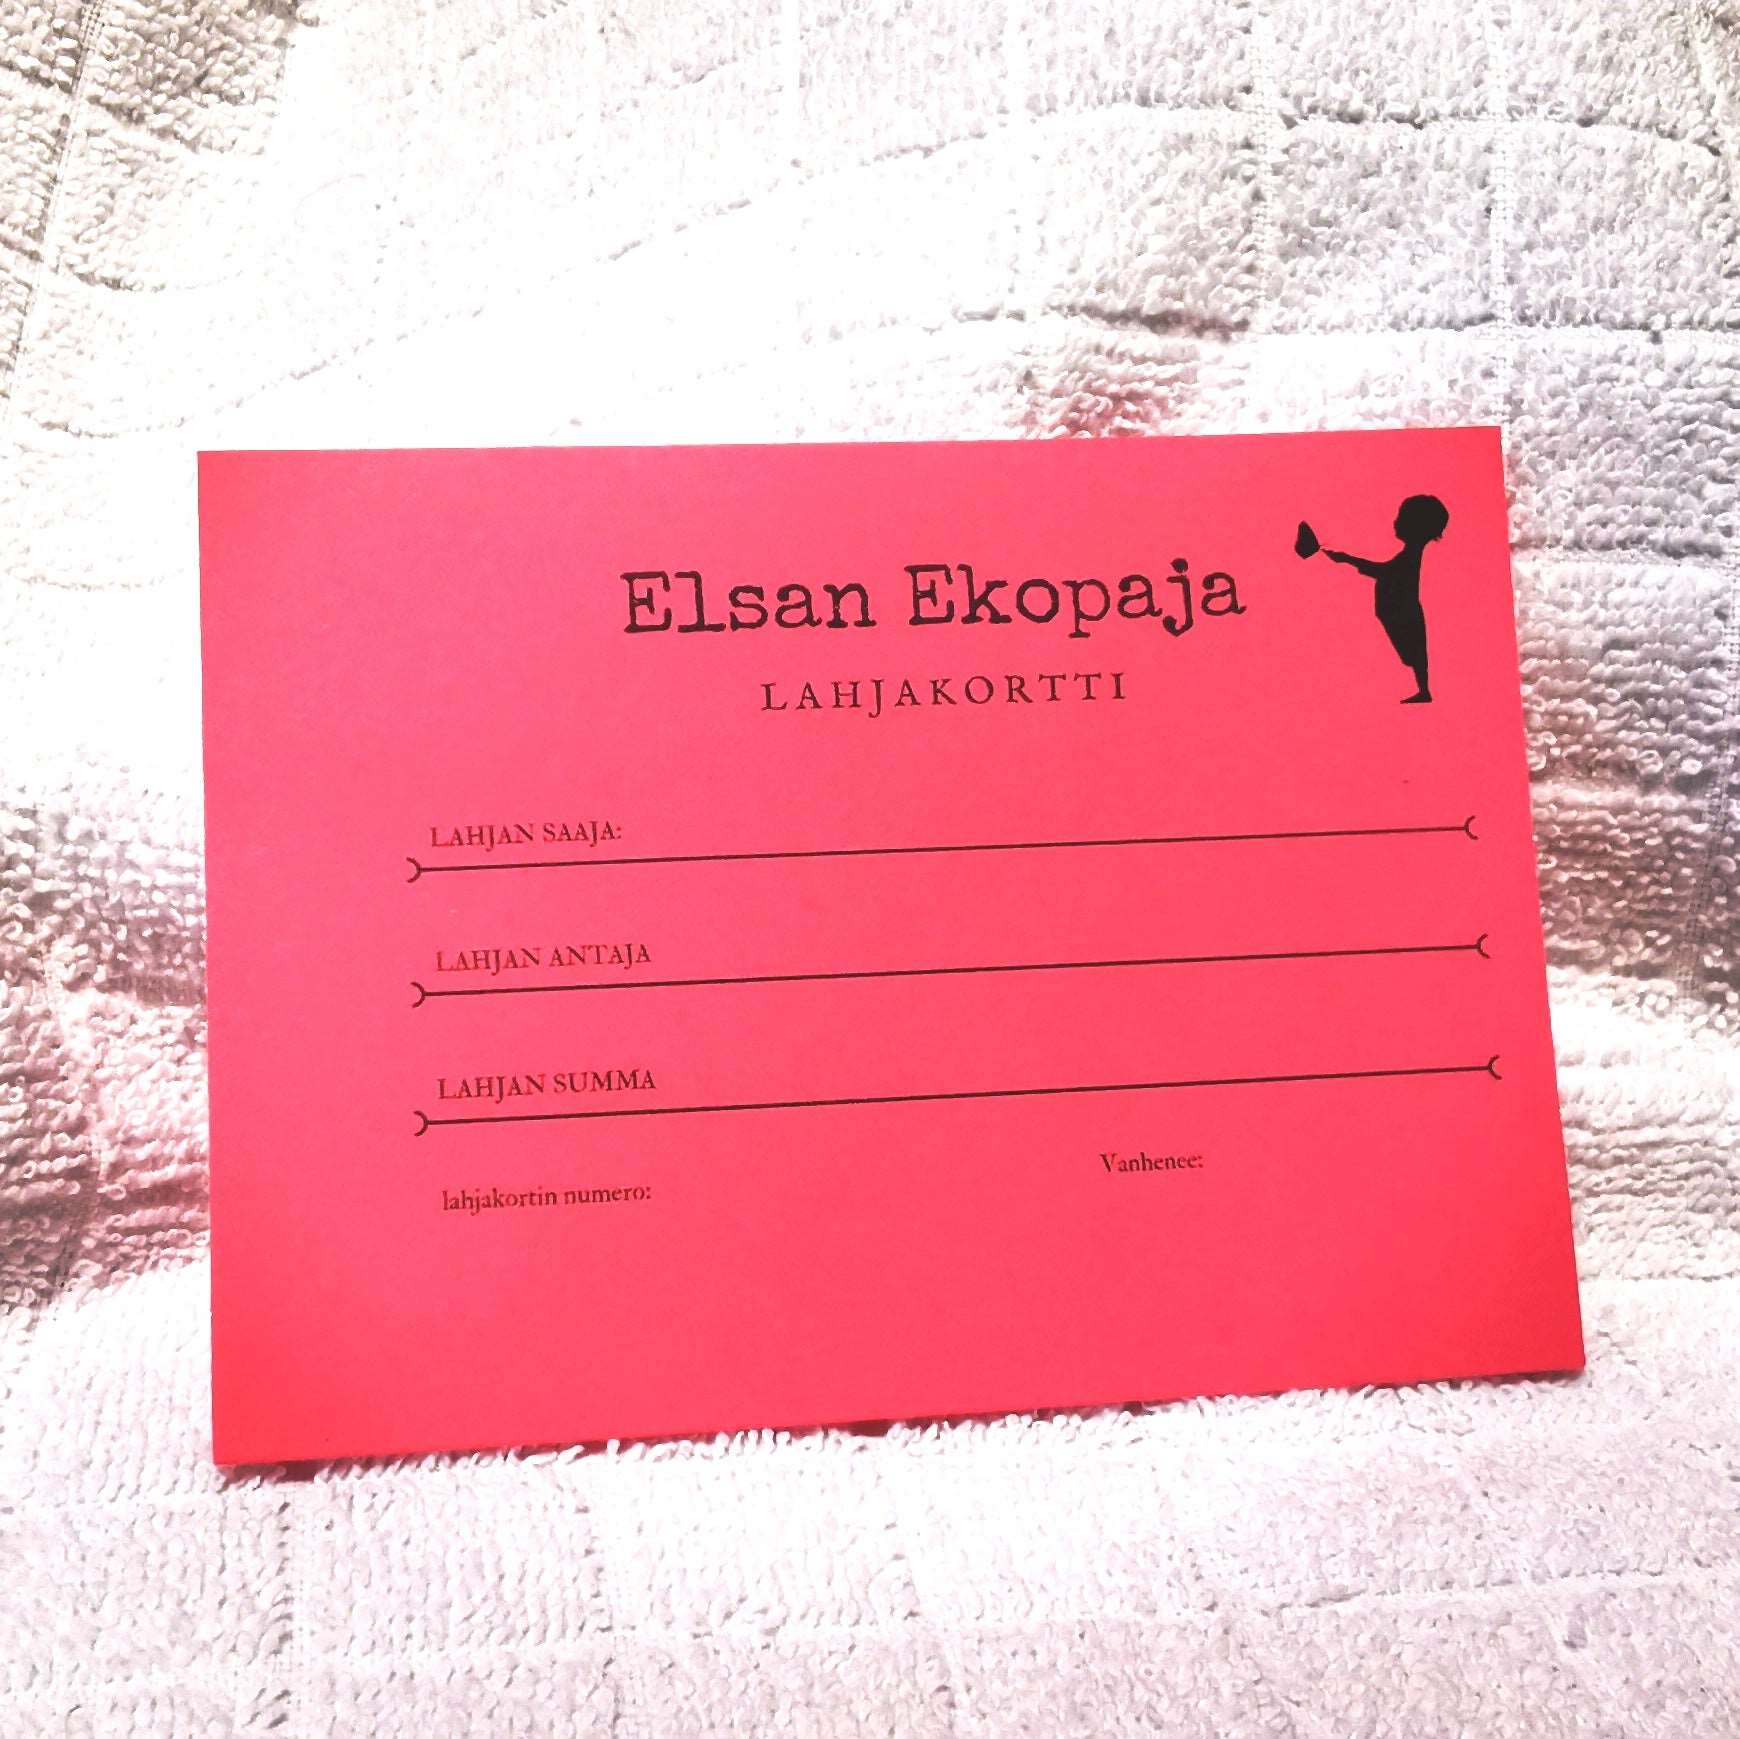 Elsan Ekopajan lahjakortti